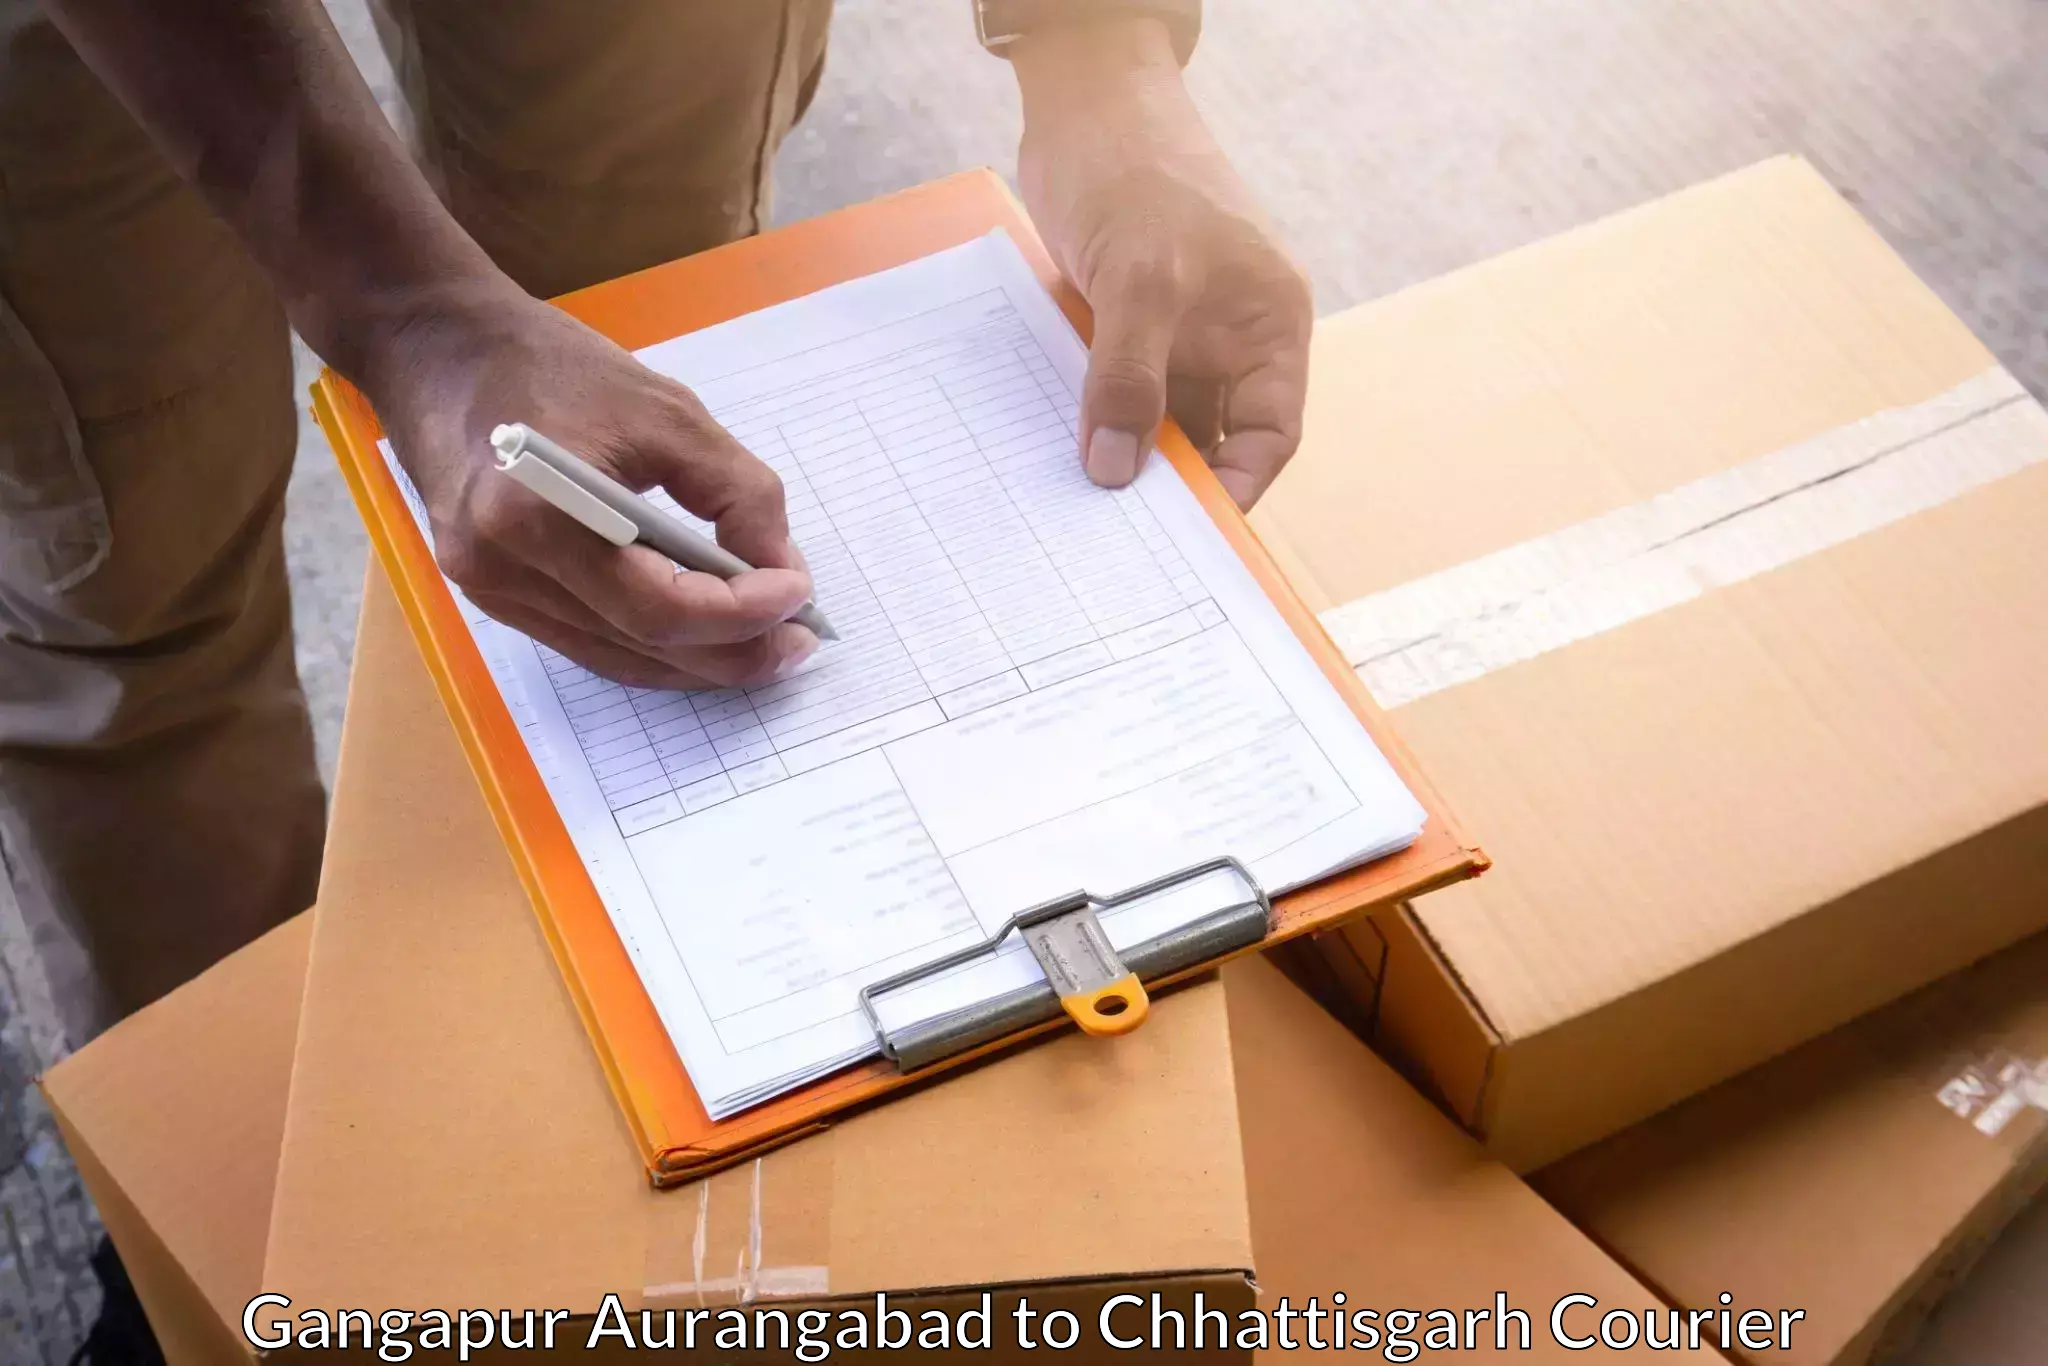 Custom courier packaging Gangapur Aurangabad to Korea Chhattisgarh